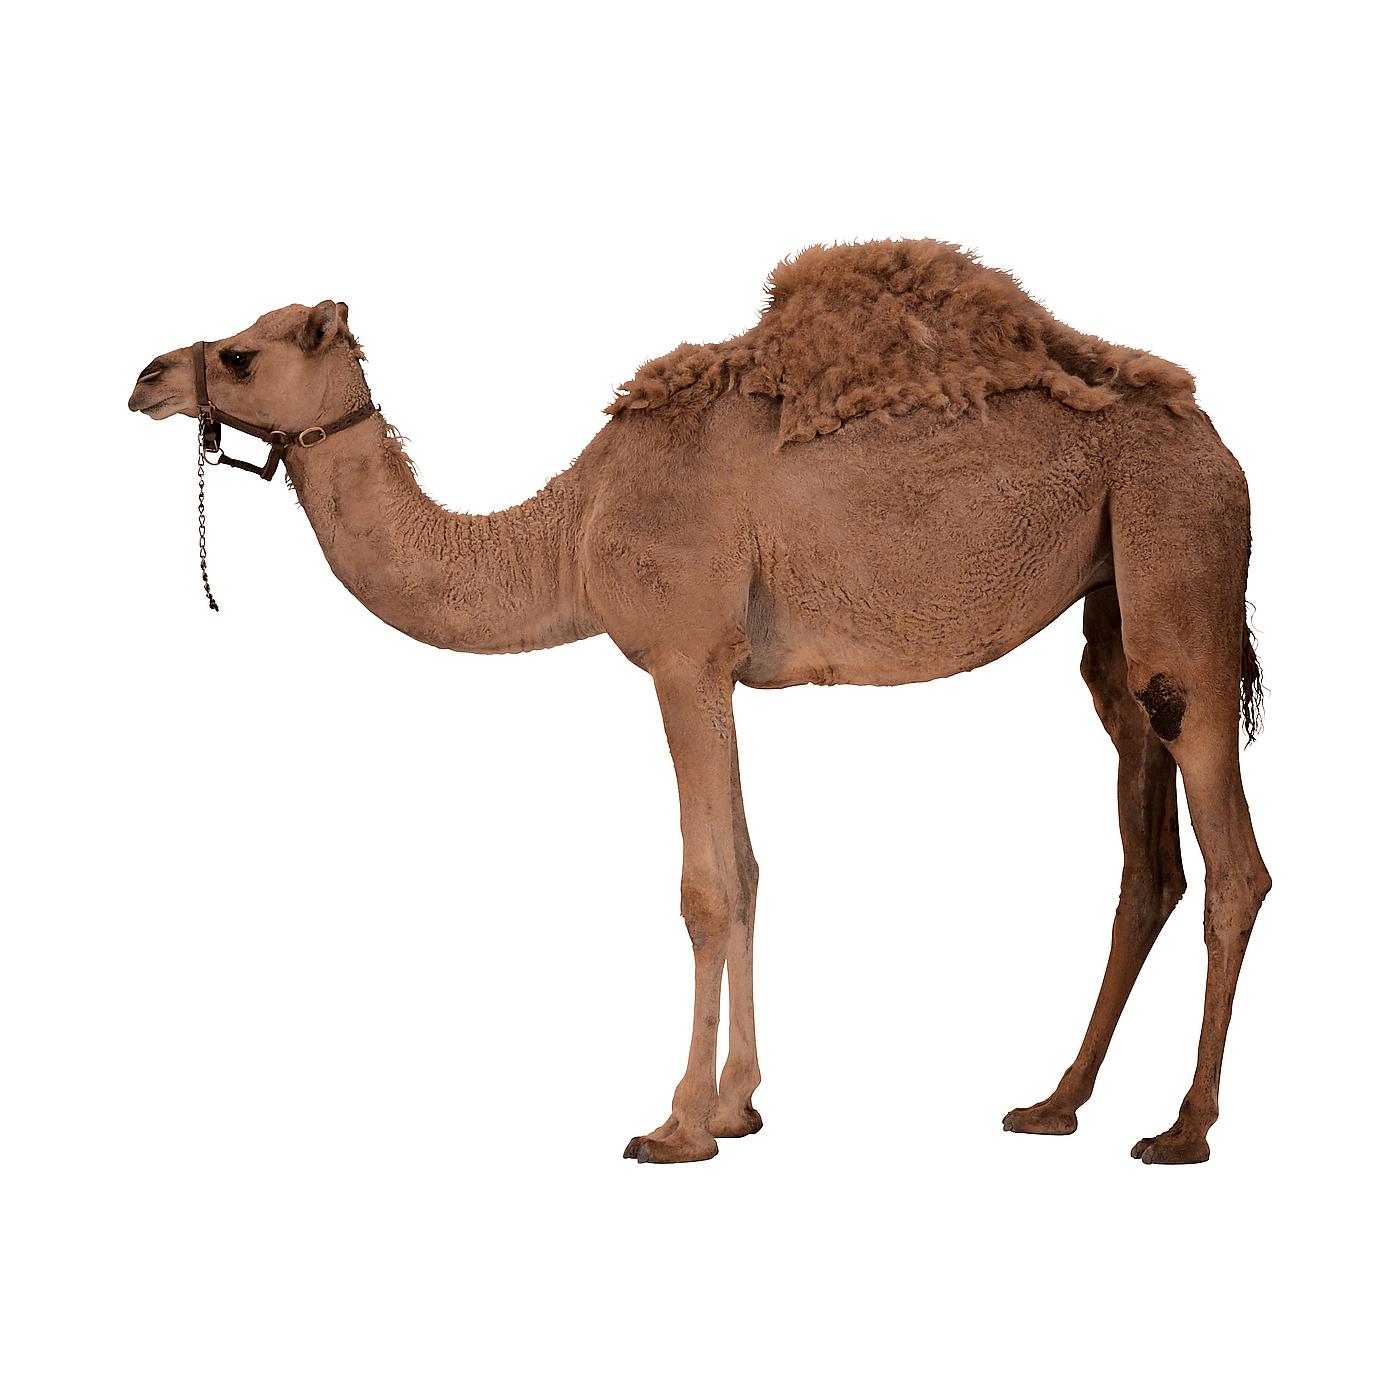 Верблюд метис 3 буквы. Карточки Домана верблюд. Одногорбый верблюд. Карточка верблюд. Верблюд для детей.